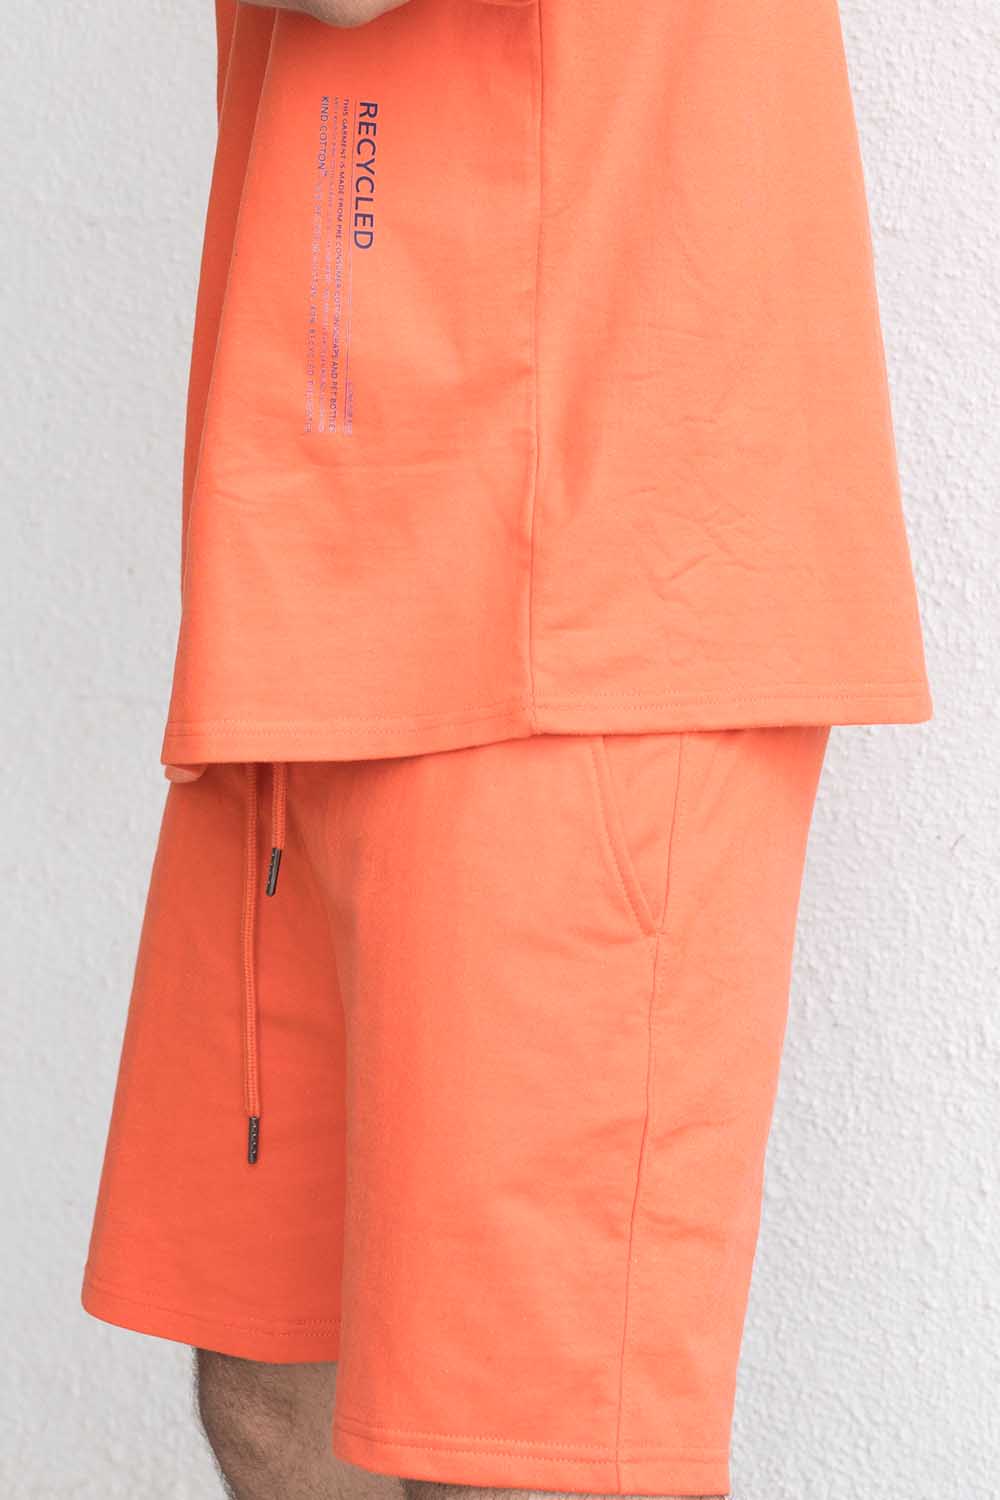 Tangerine Oversized T-shirt Shorts Co-ord